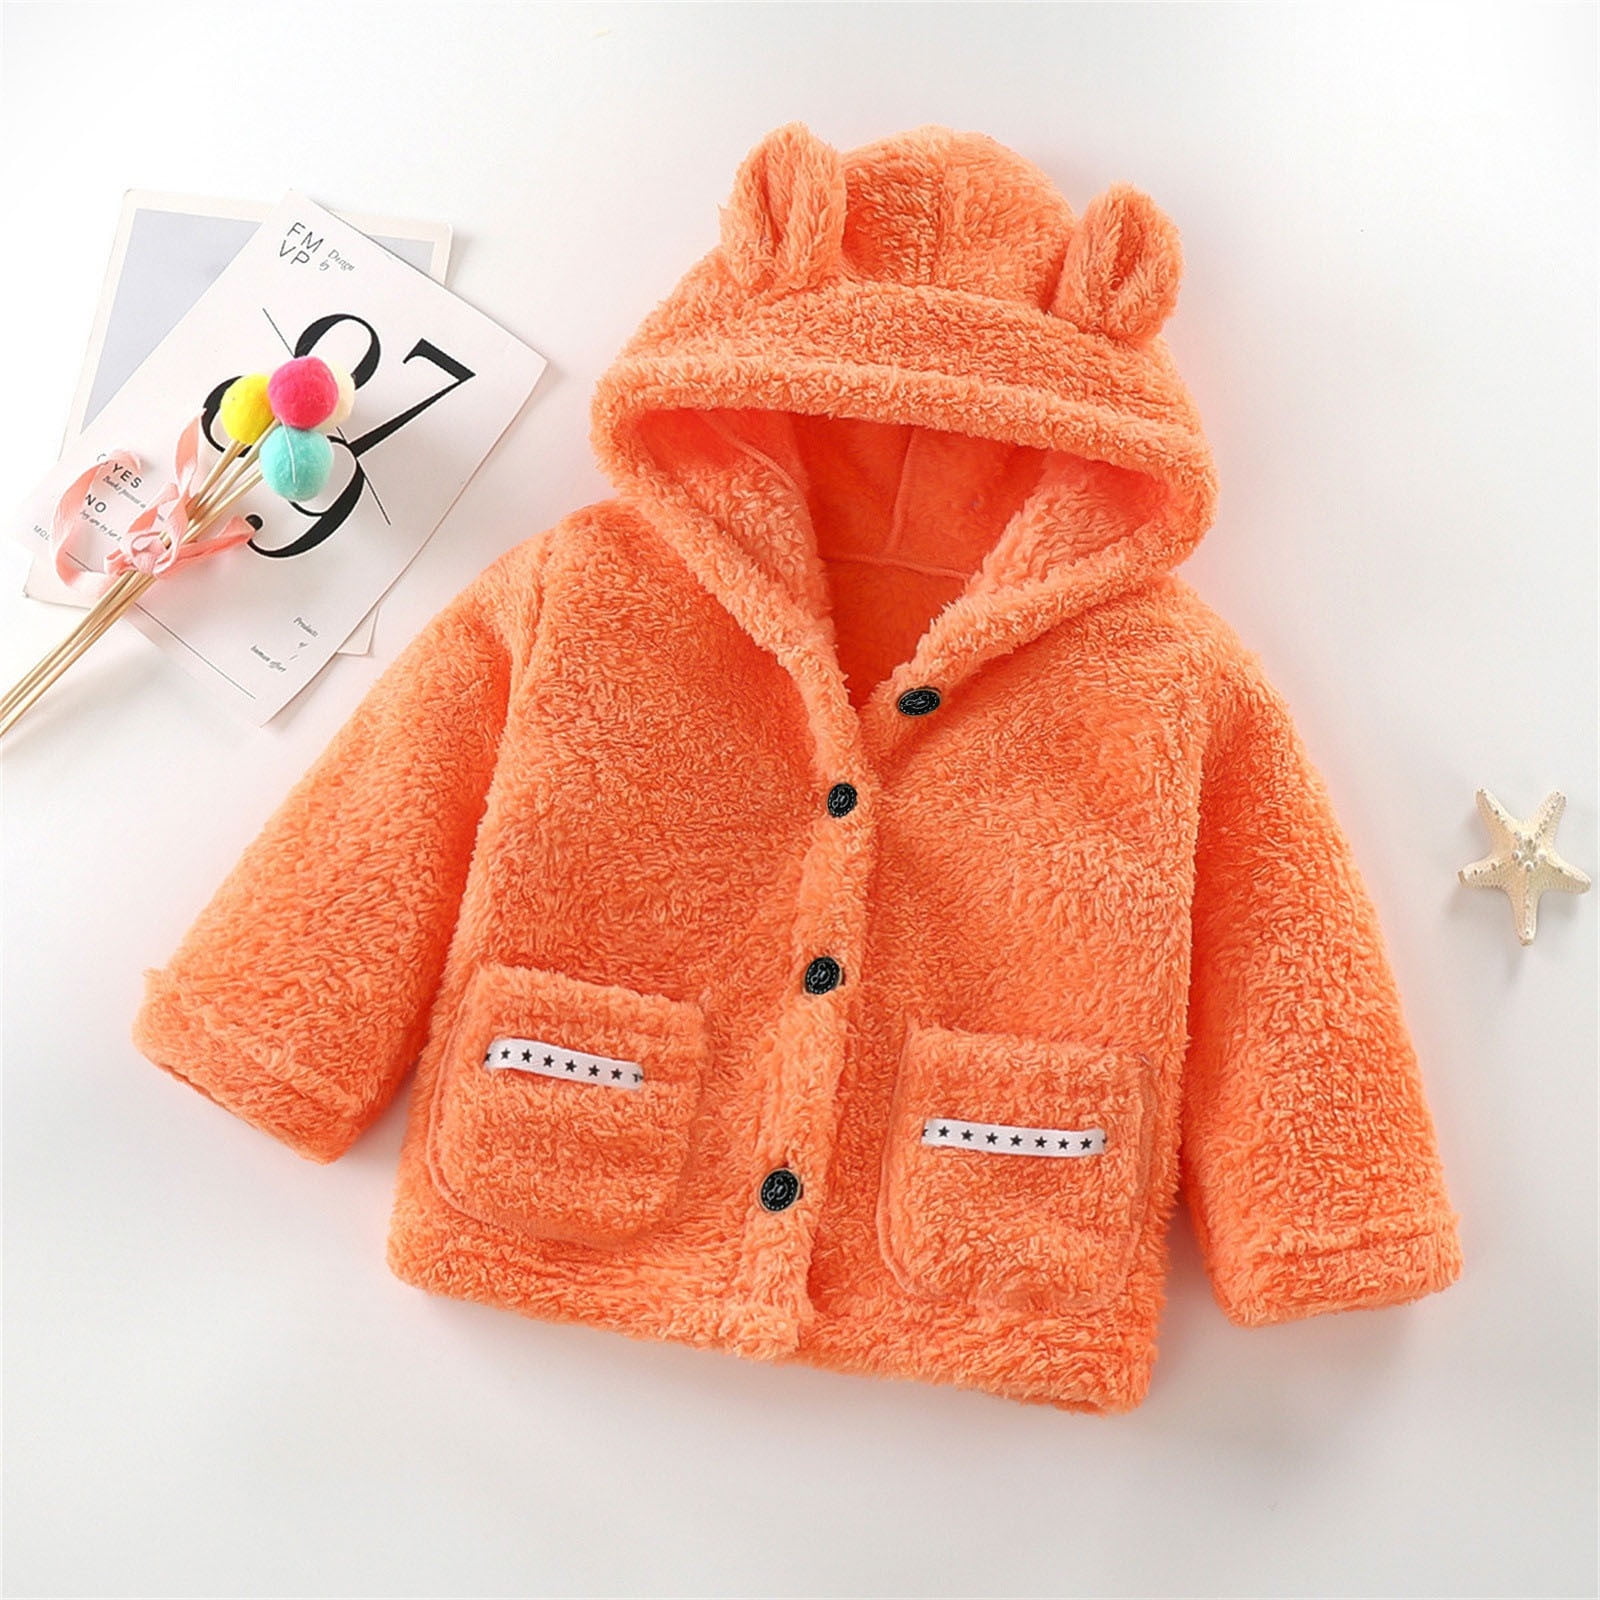 LEEy-world Baby Boy'S Clothing Winter Children Kids Fashion Coat Long  Sleeve Cartoon Pattern Hoodie Zip Up Coats Keep Warm Jacket Clothes,Pink